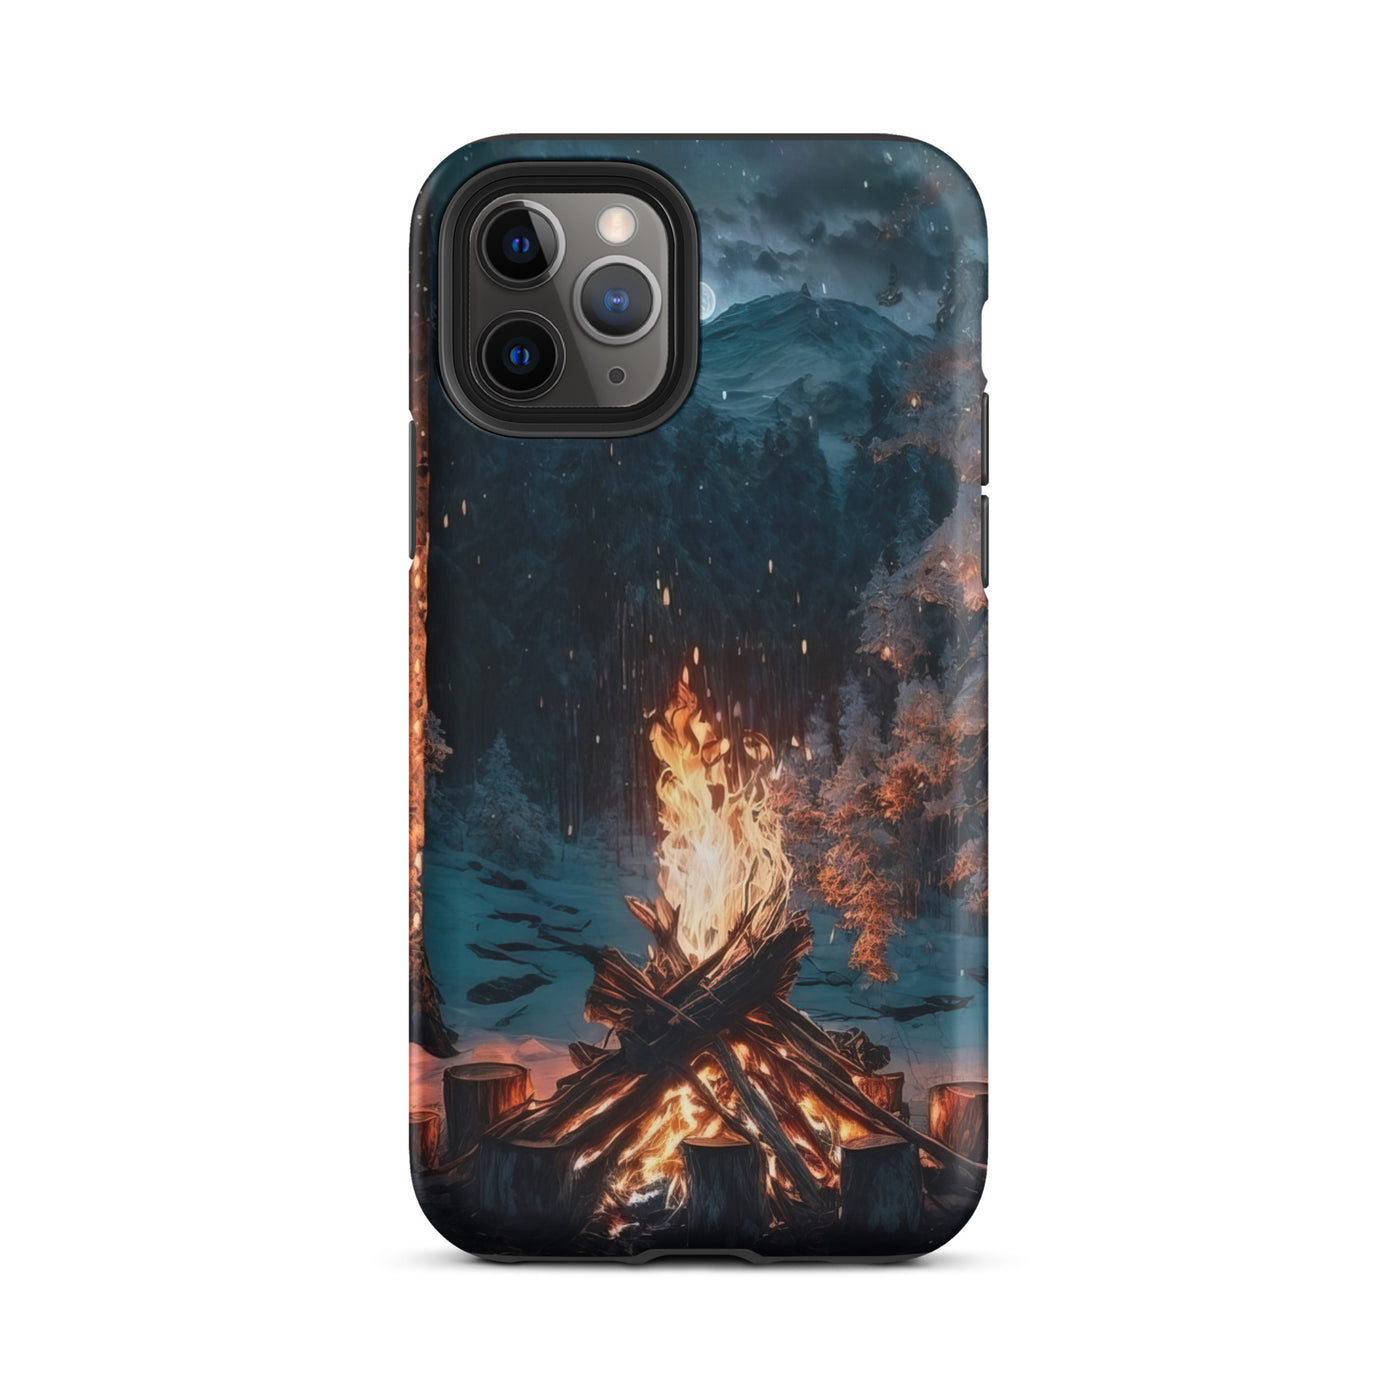 Lagerfeuer beim Camping - Wald mit Schneebedeckten Bäumen - Malerei - iPhone Schutzhülle (robust) camping xxx iPhone 11 Pro